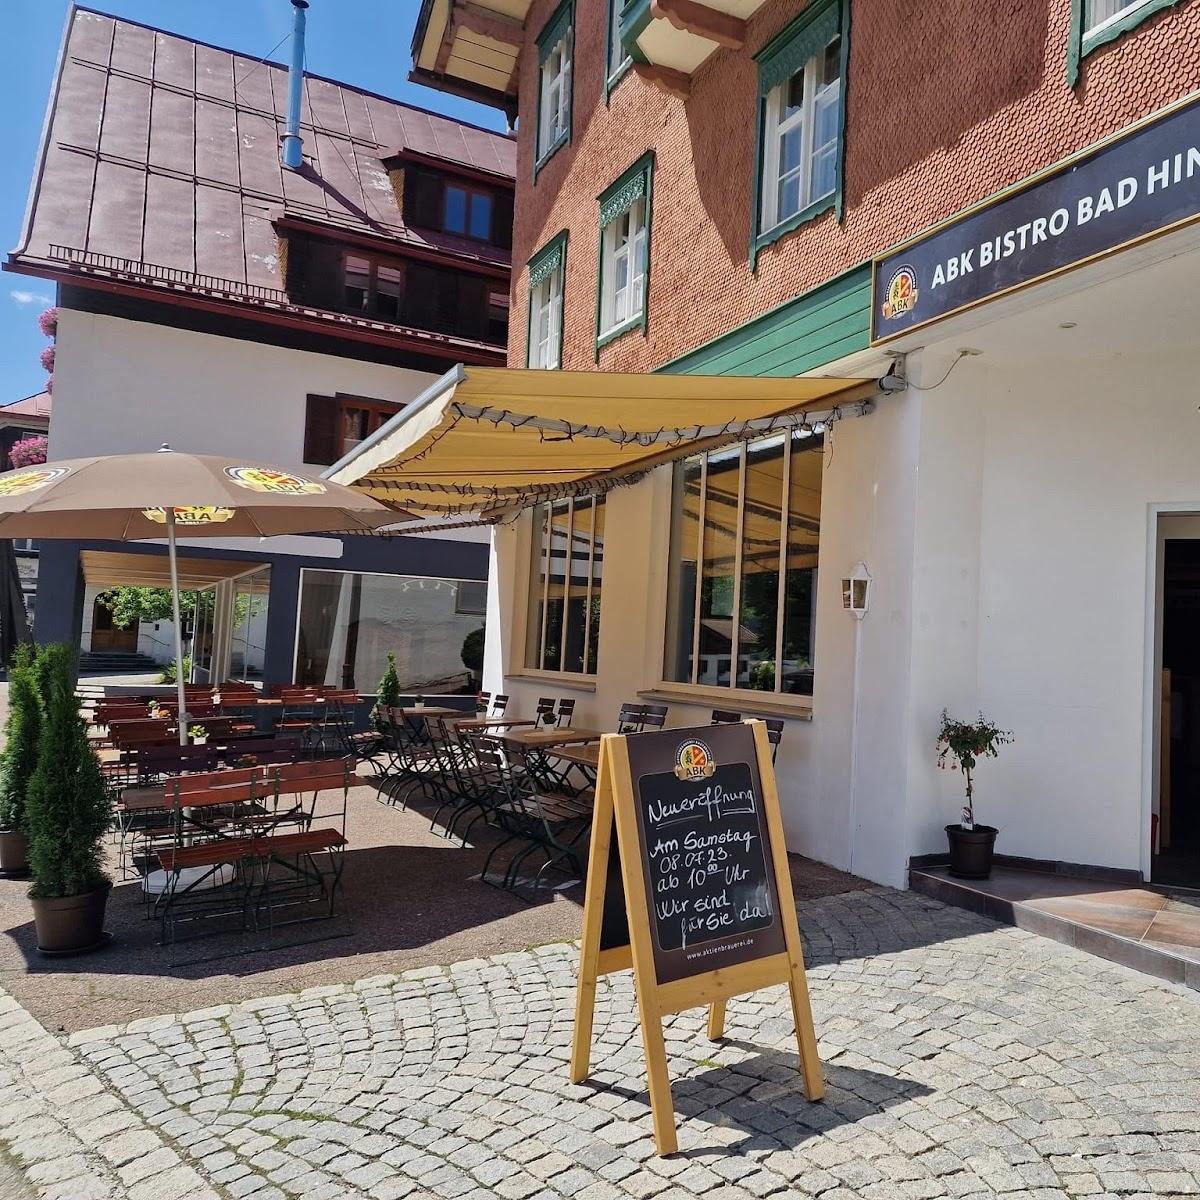 Restaurant "Zur Salzer Stube" in Bad Hindelang